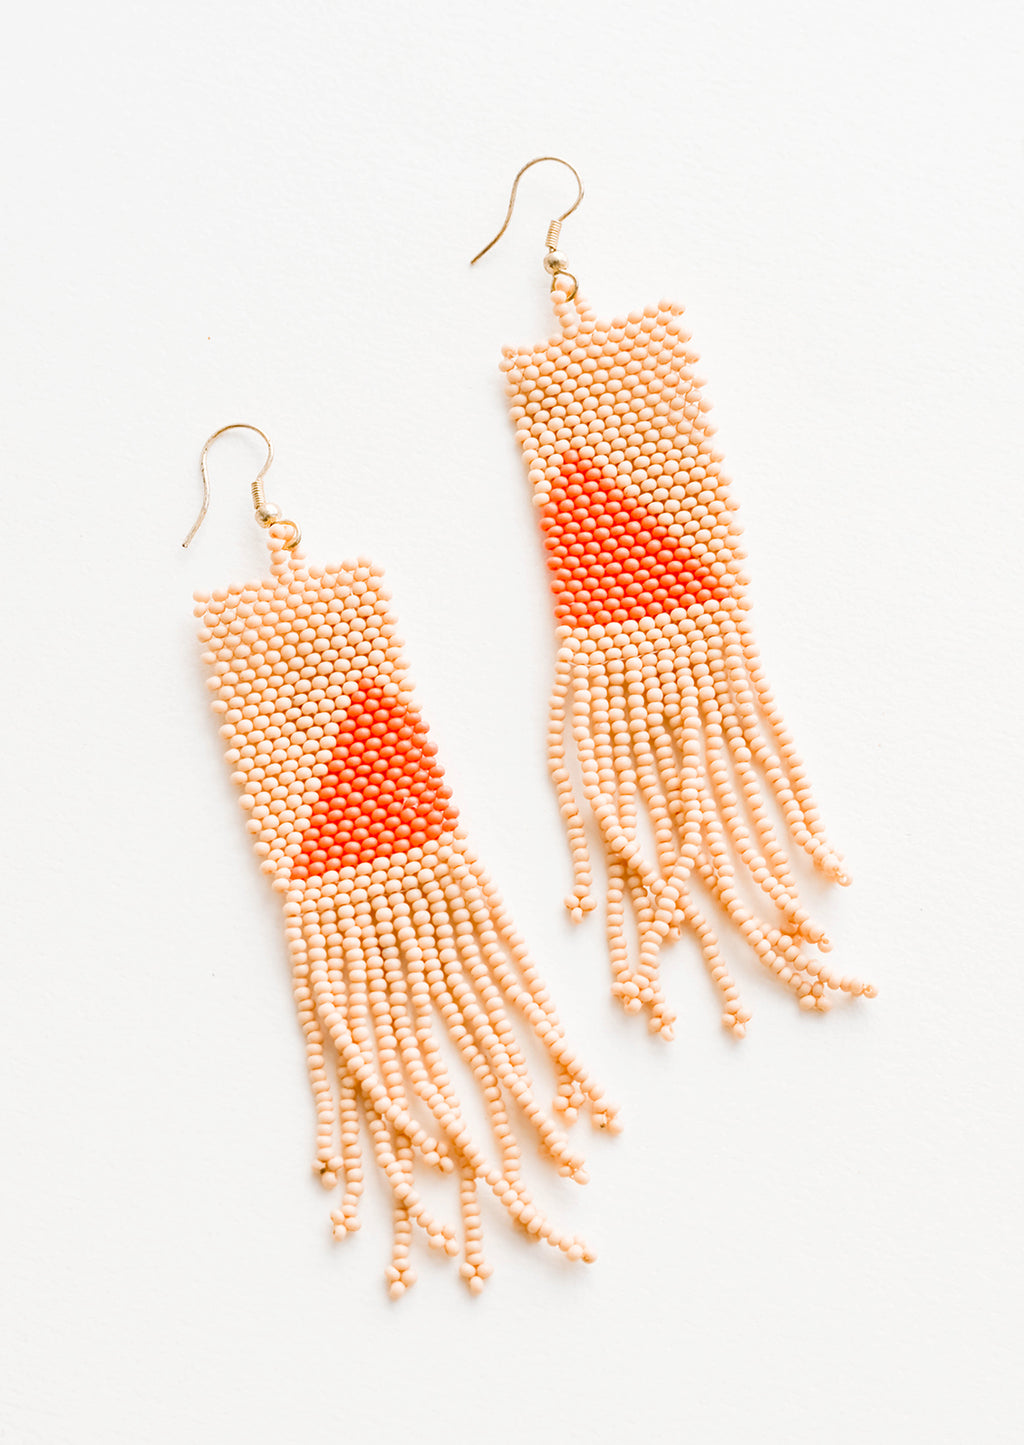 1: Long rectangular fringe beaded earrings in peach with orange triangle designs.